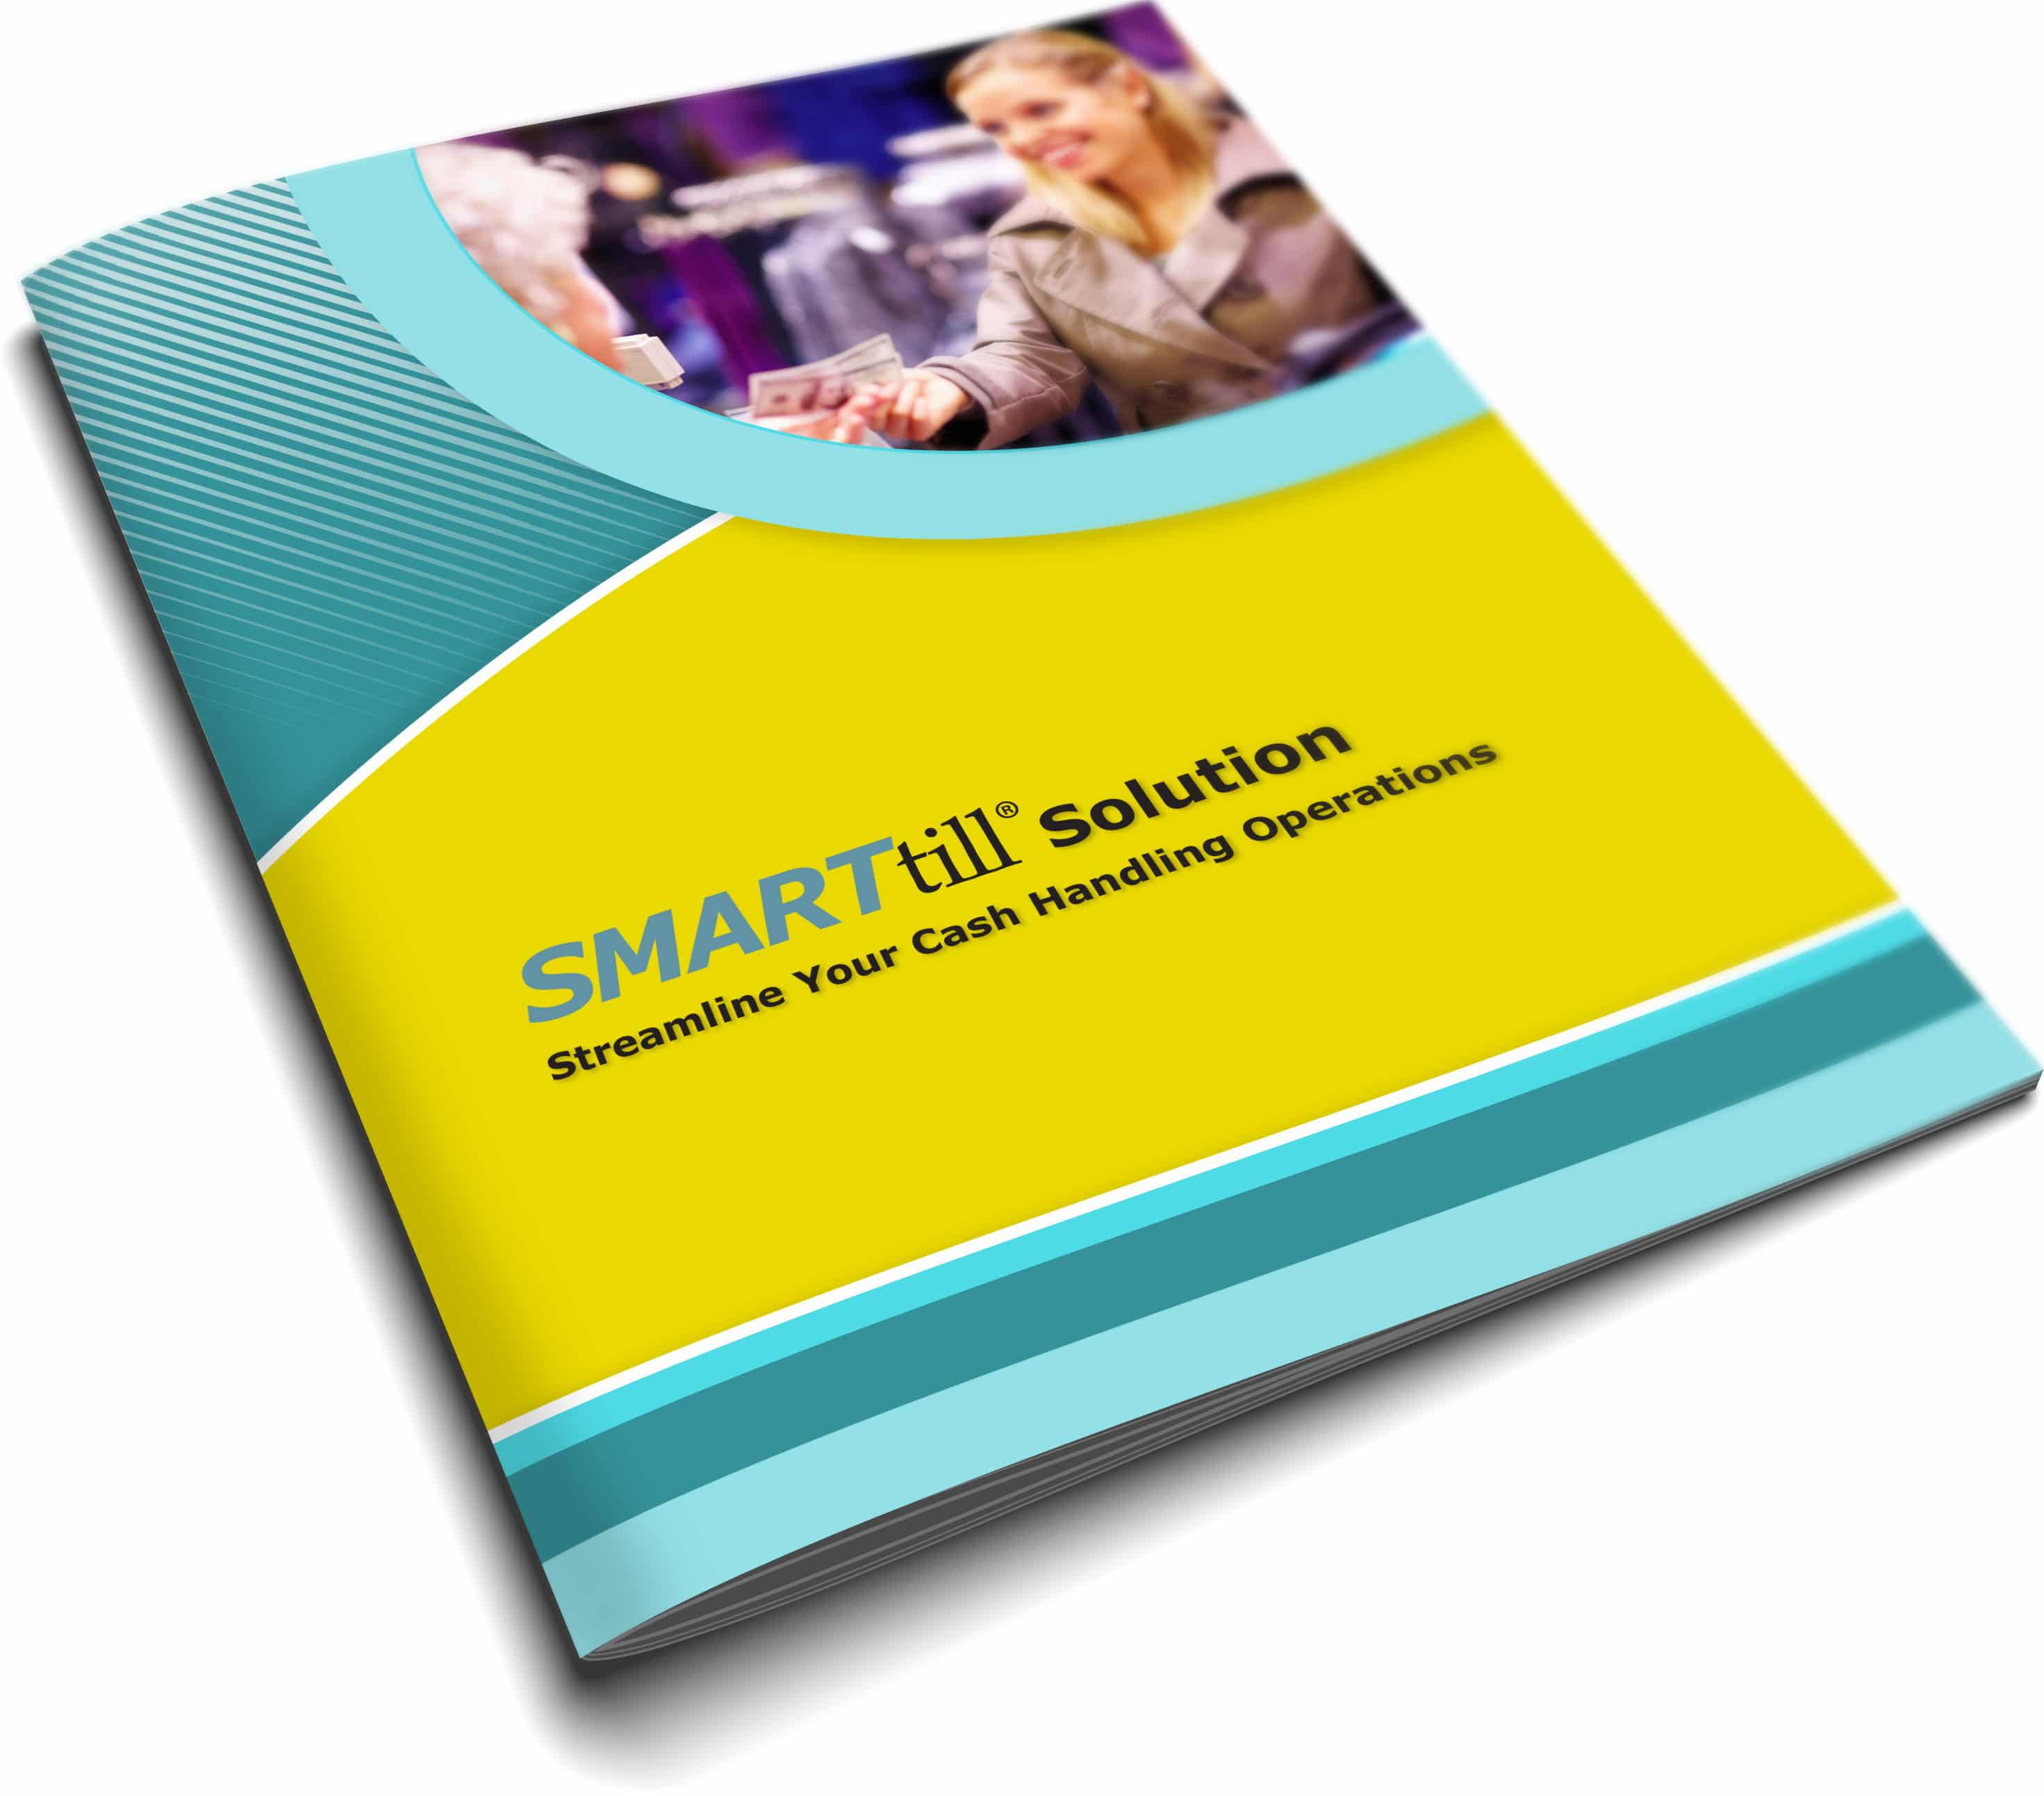 The SMARTtill® Solution eBook